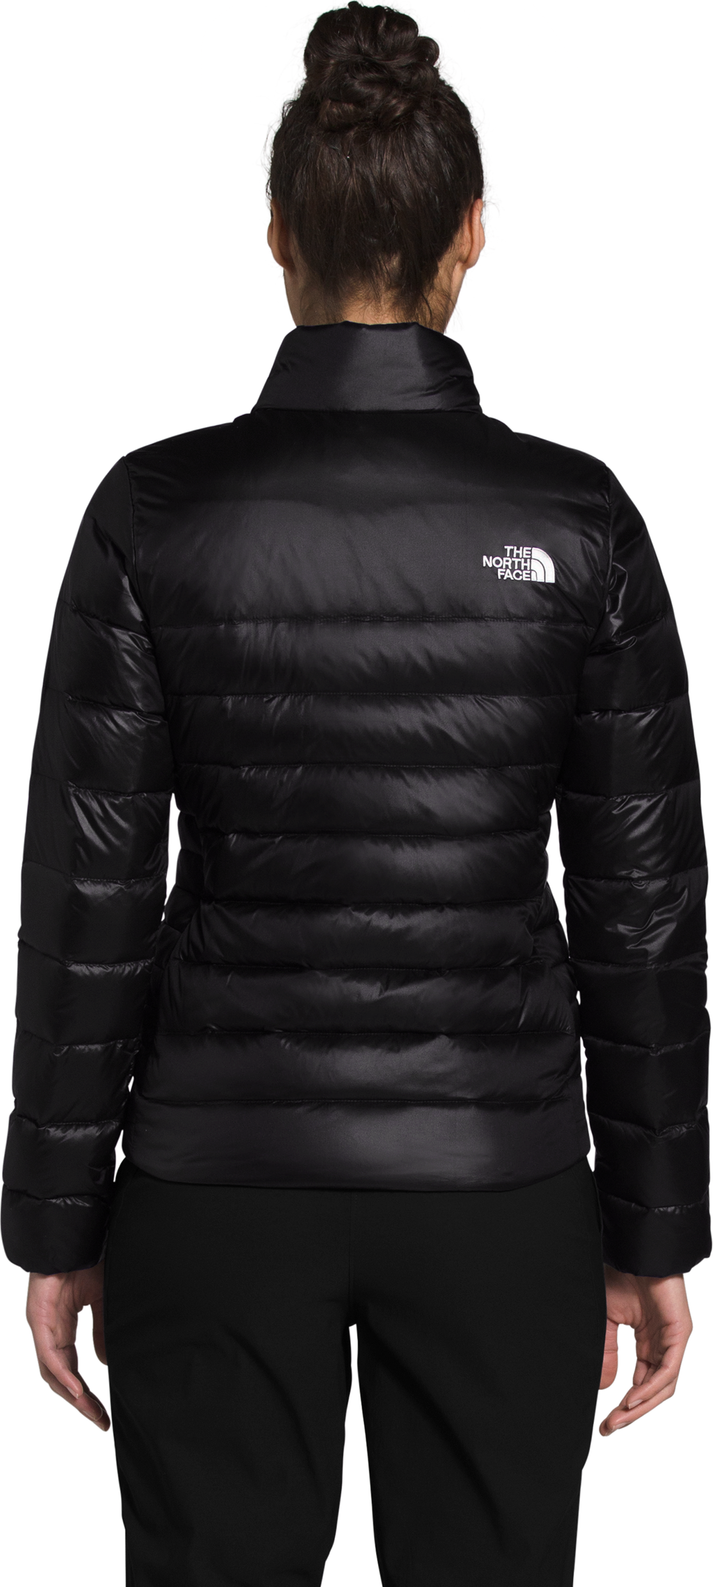 The North Face Apparel Women's Aconcagua Jacket Tnf Black